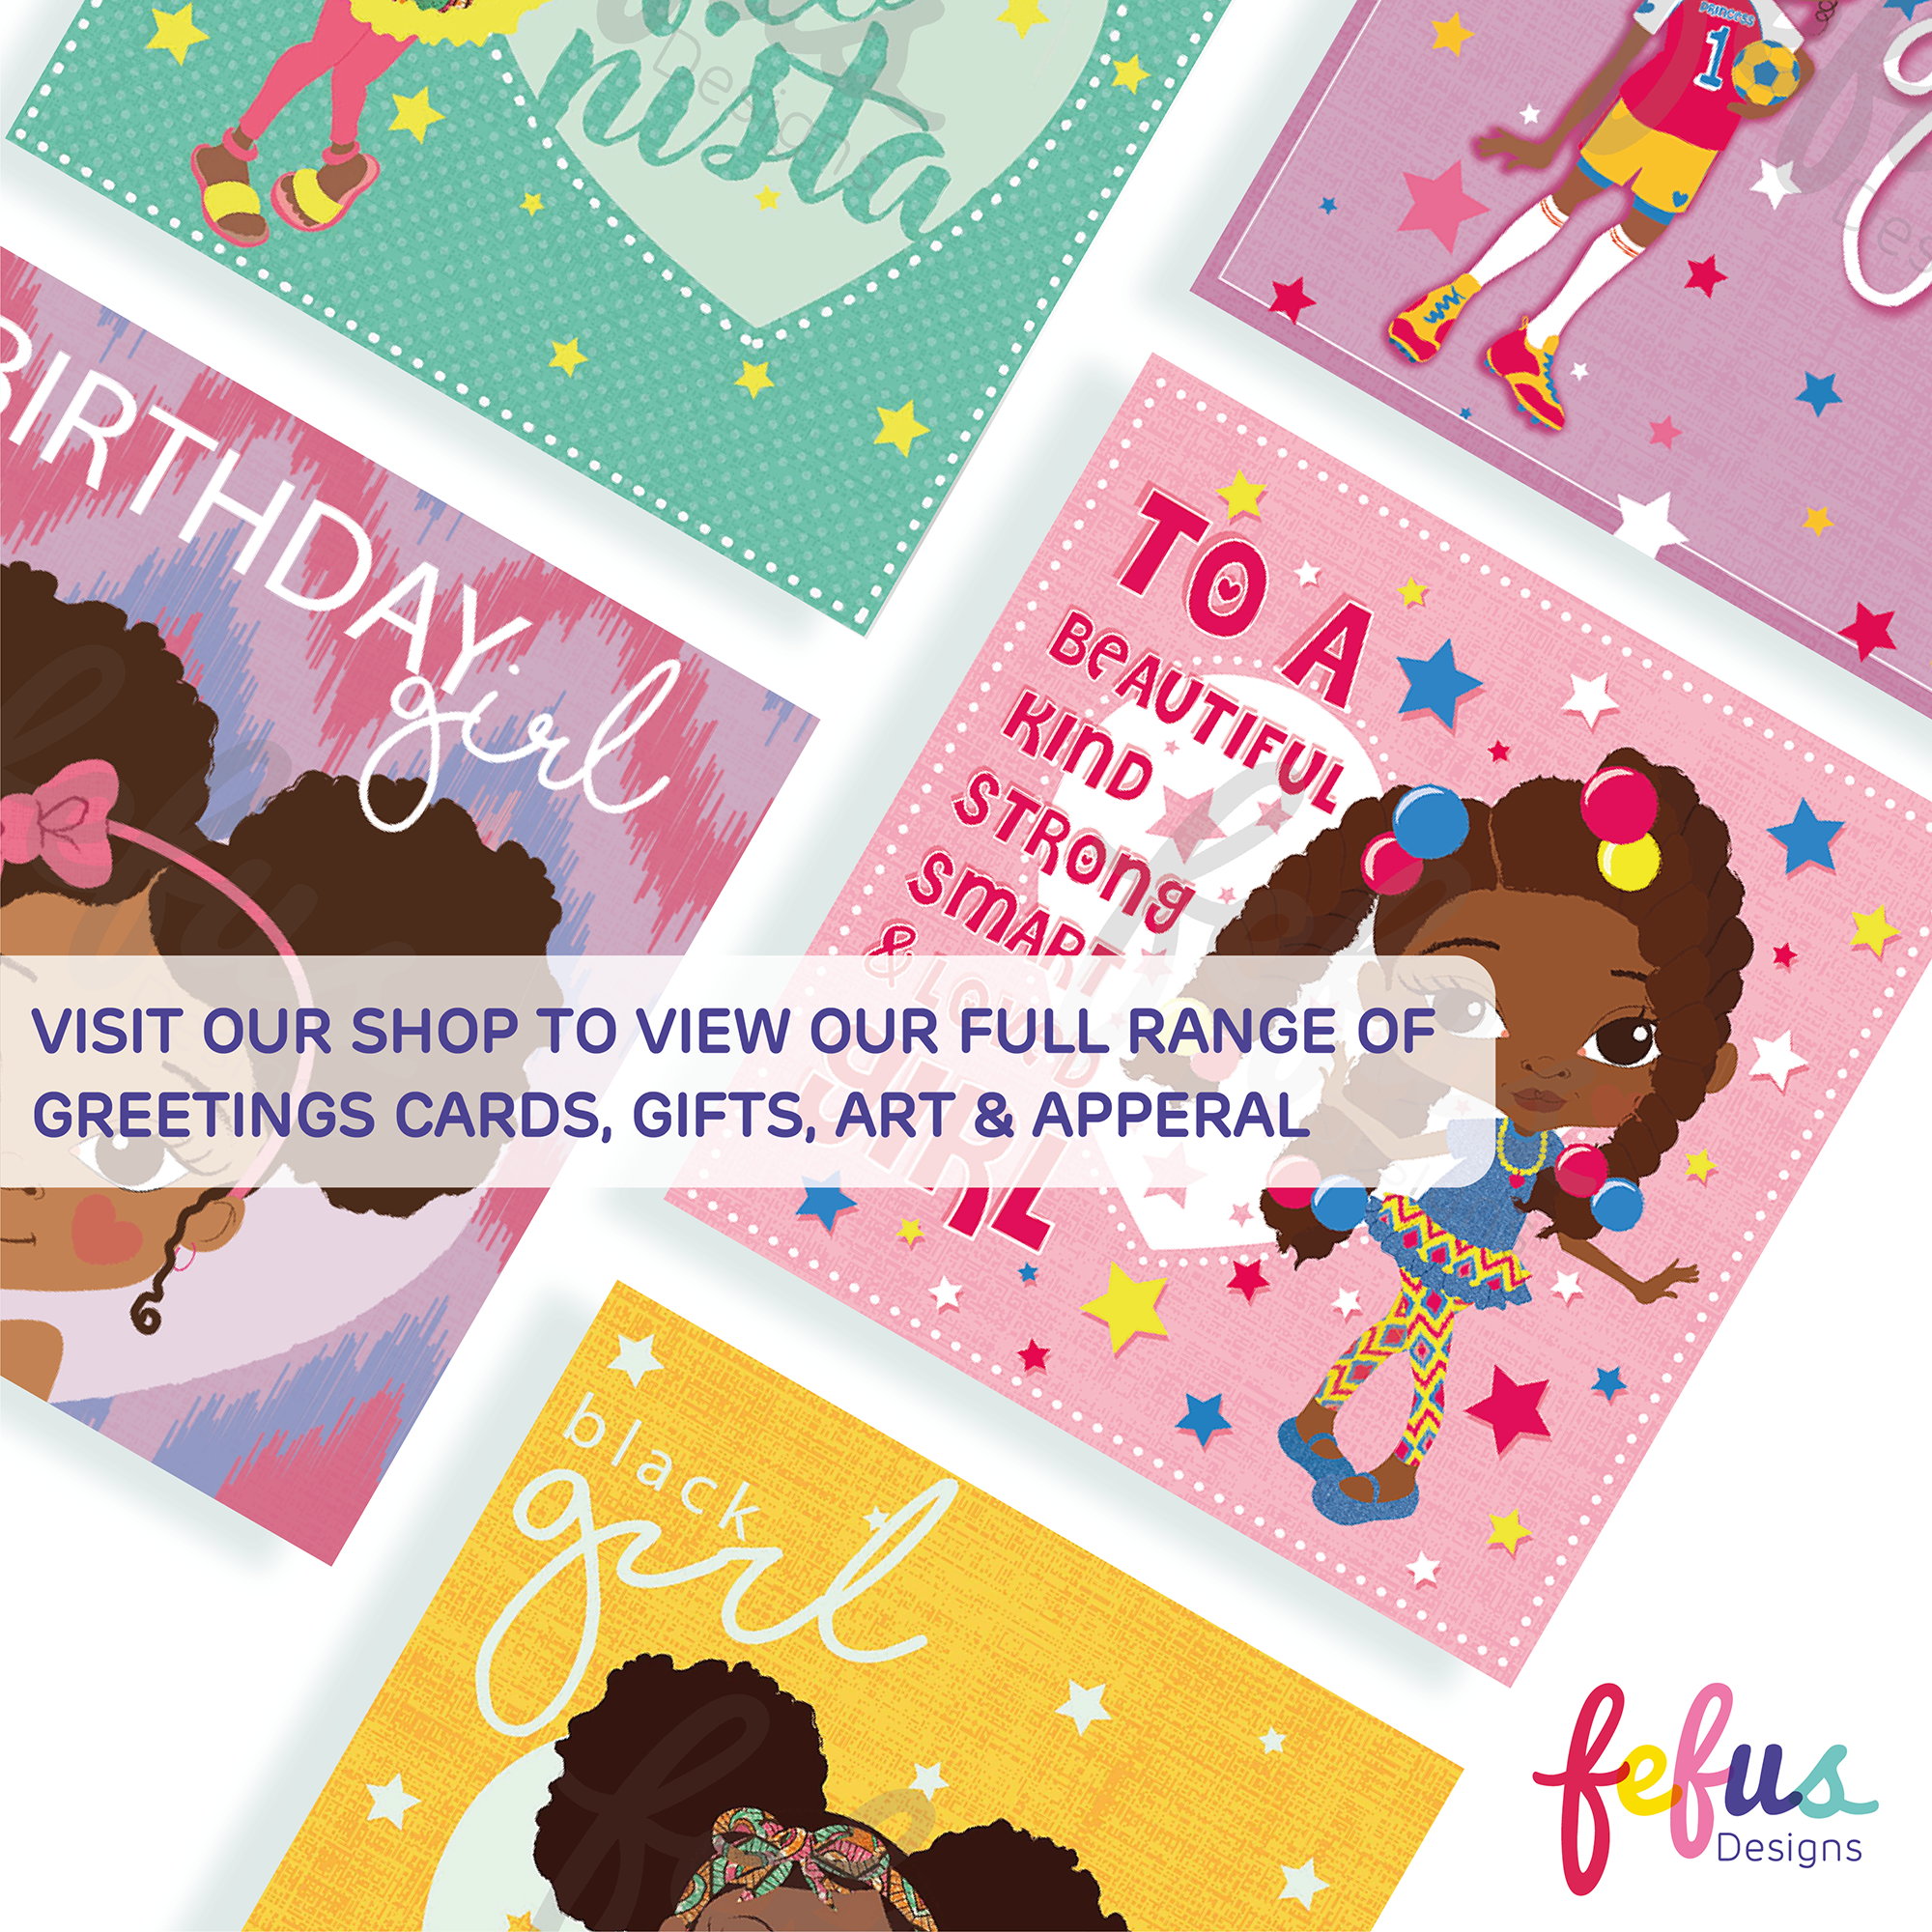 Black Rastafarian Fairy Girl  - Brown Girl Birthday Card | Fefus Designs